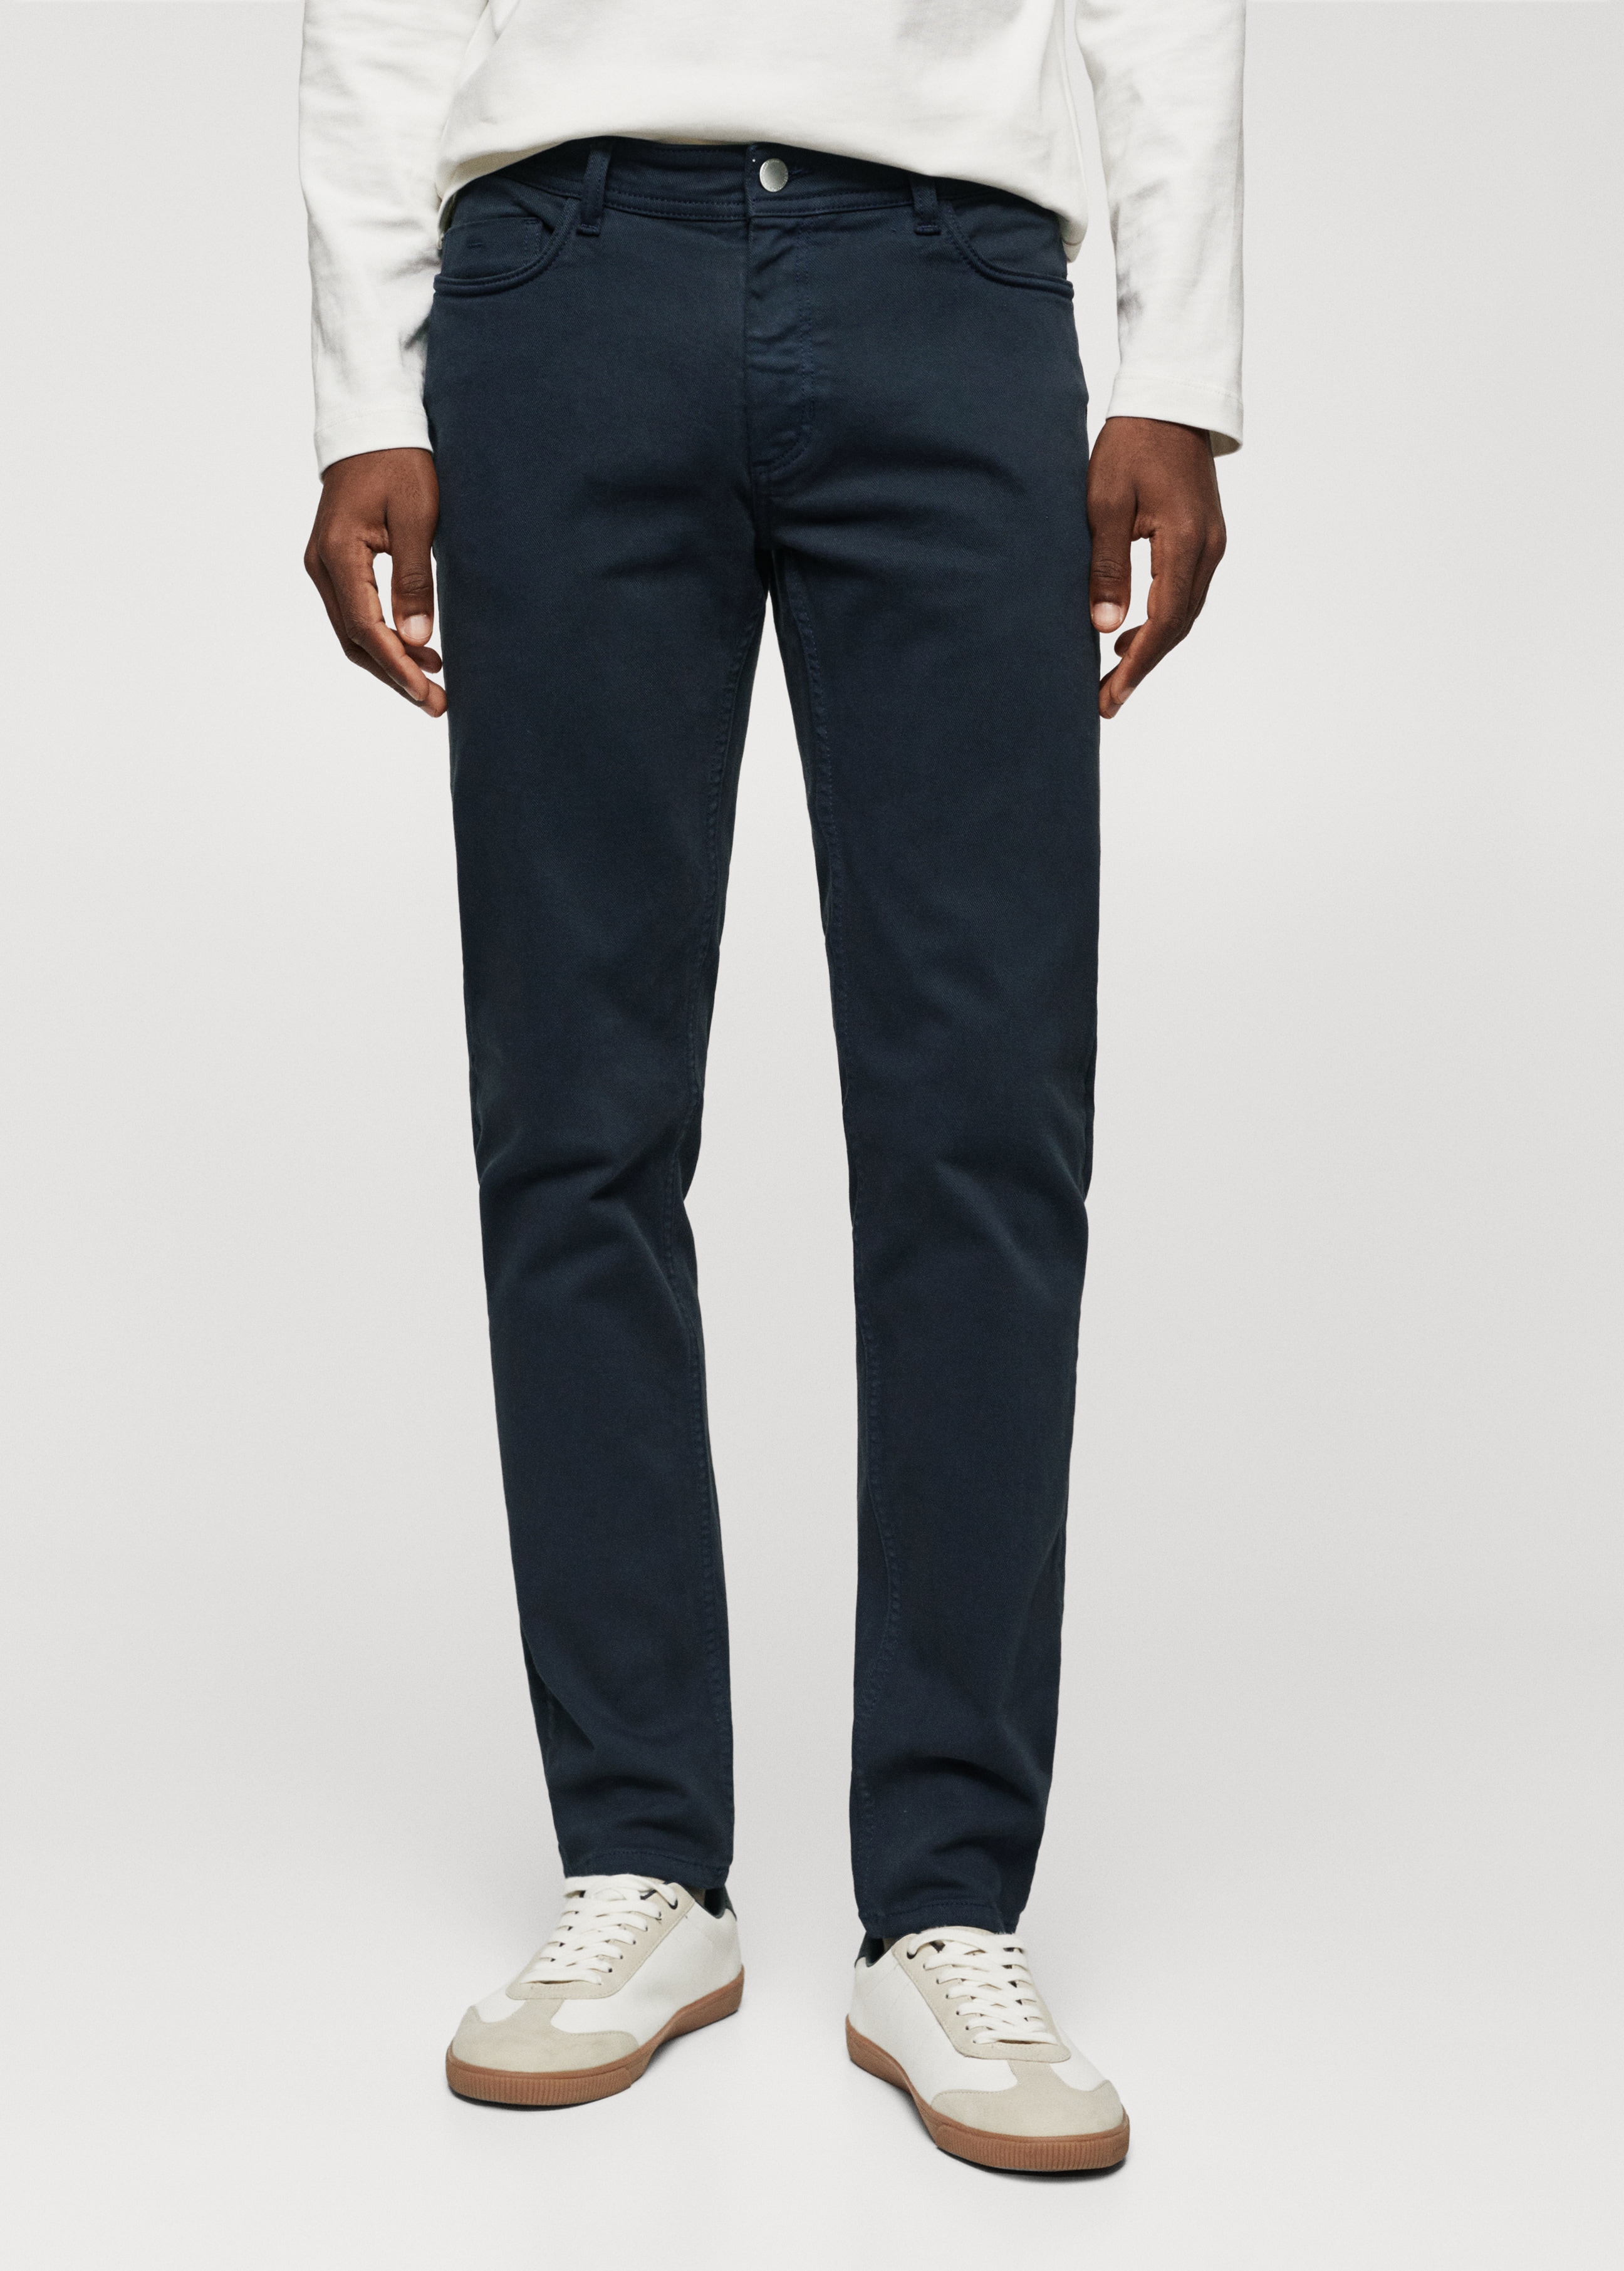 Jeans slim fit color - Plano medio